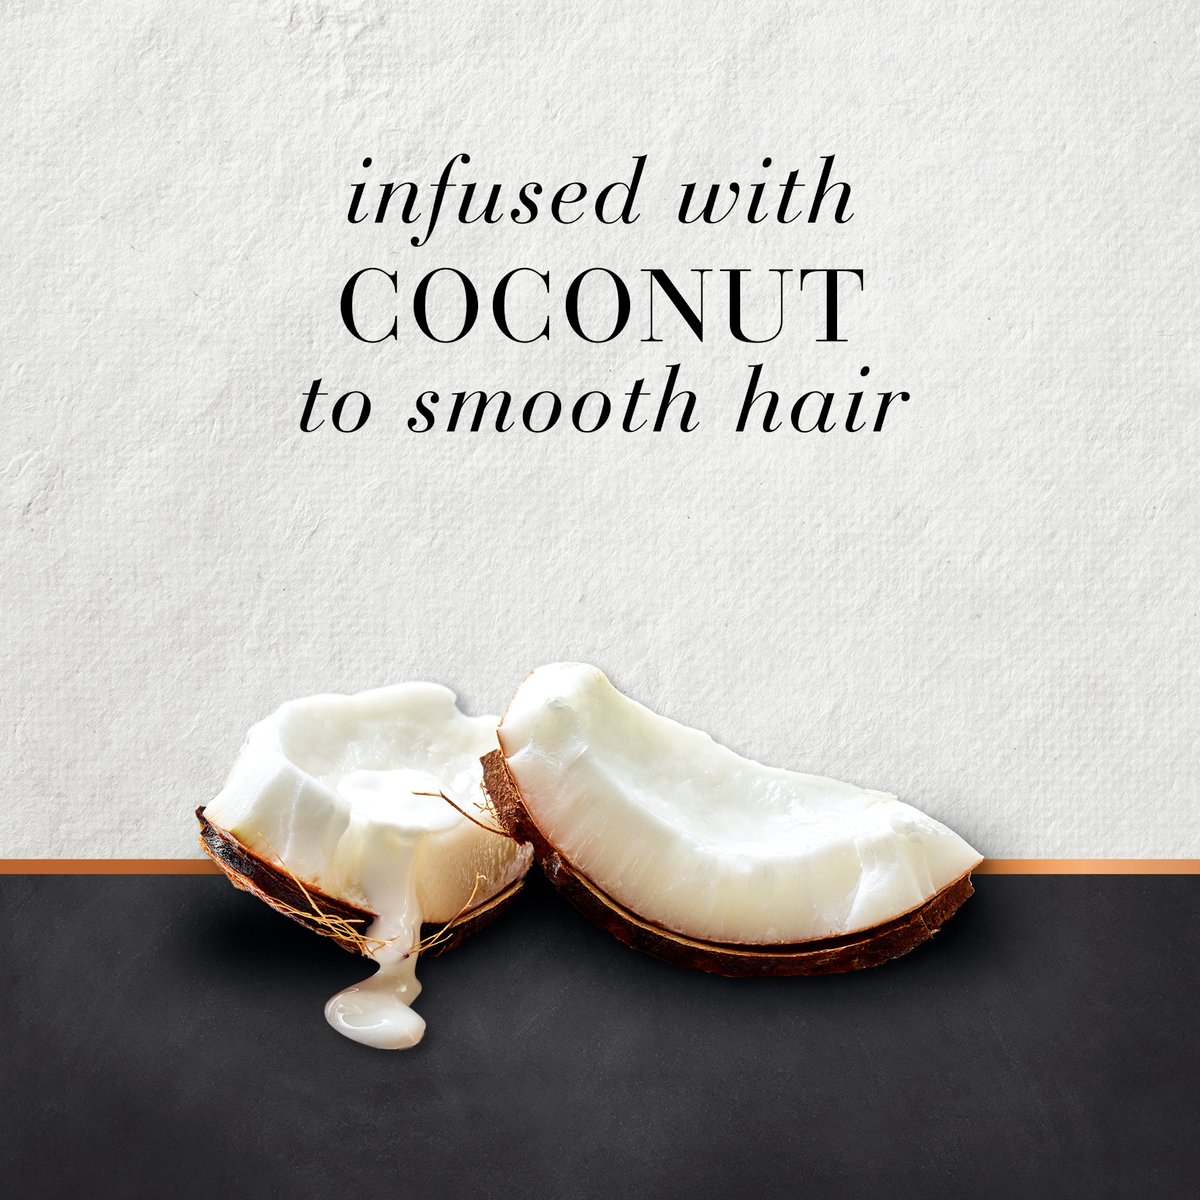 Hair Food Nourishing Coconut Oil Hair Mask For Curly Hair 50 ml